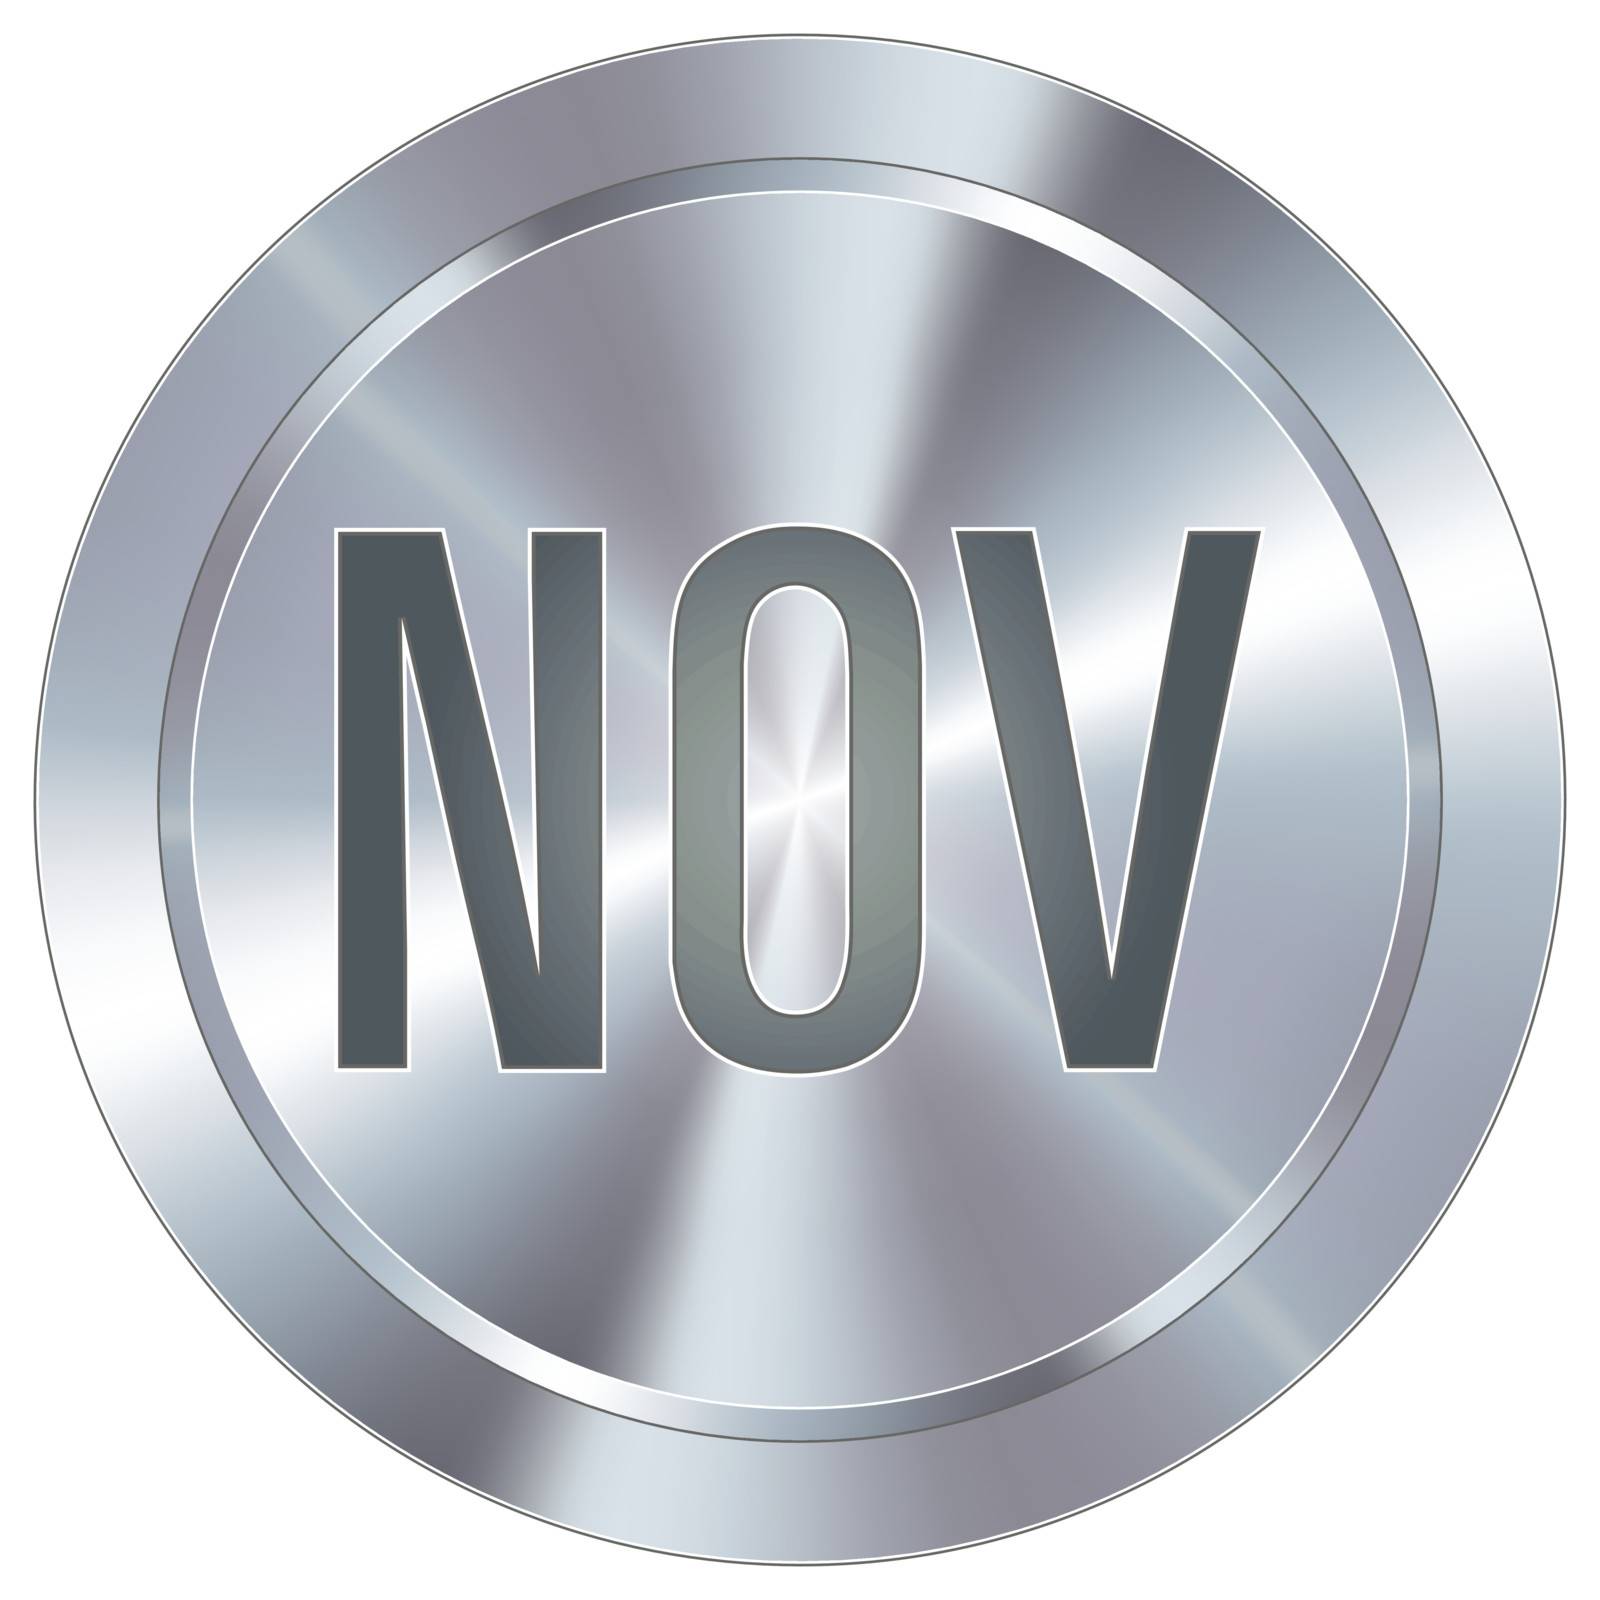 November calendar month icon on round stainless steel modern industrial button